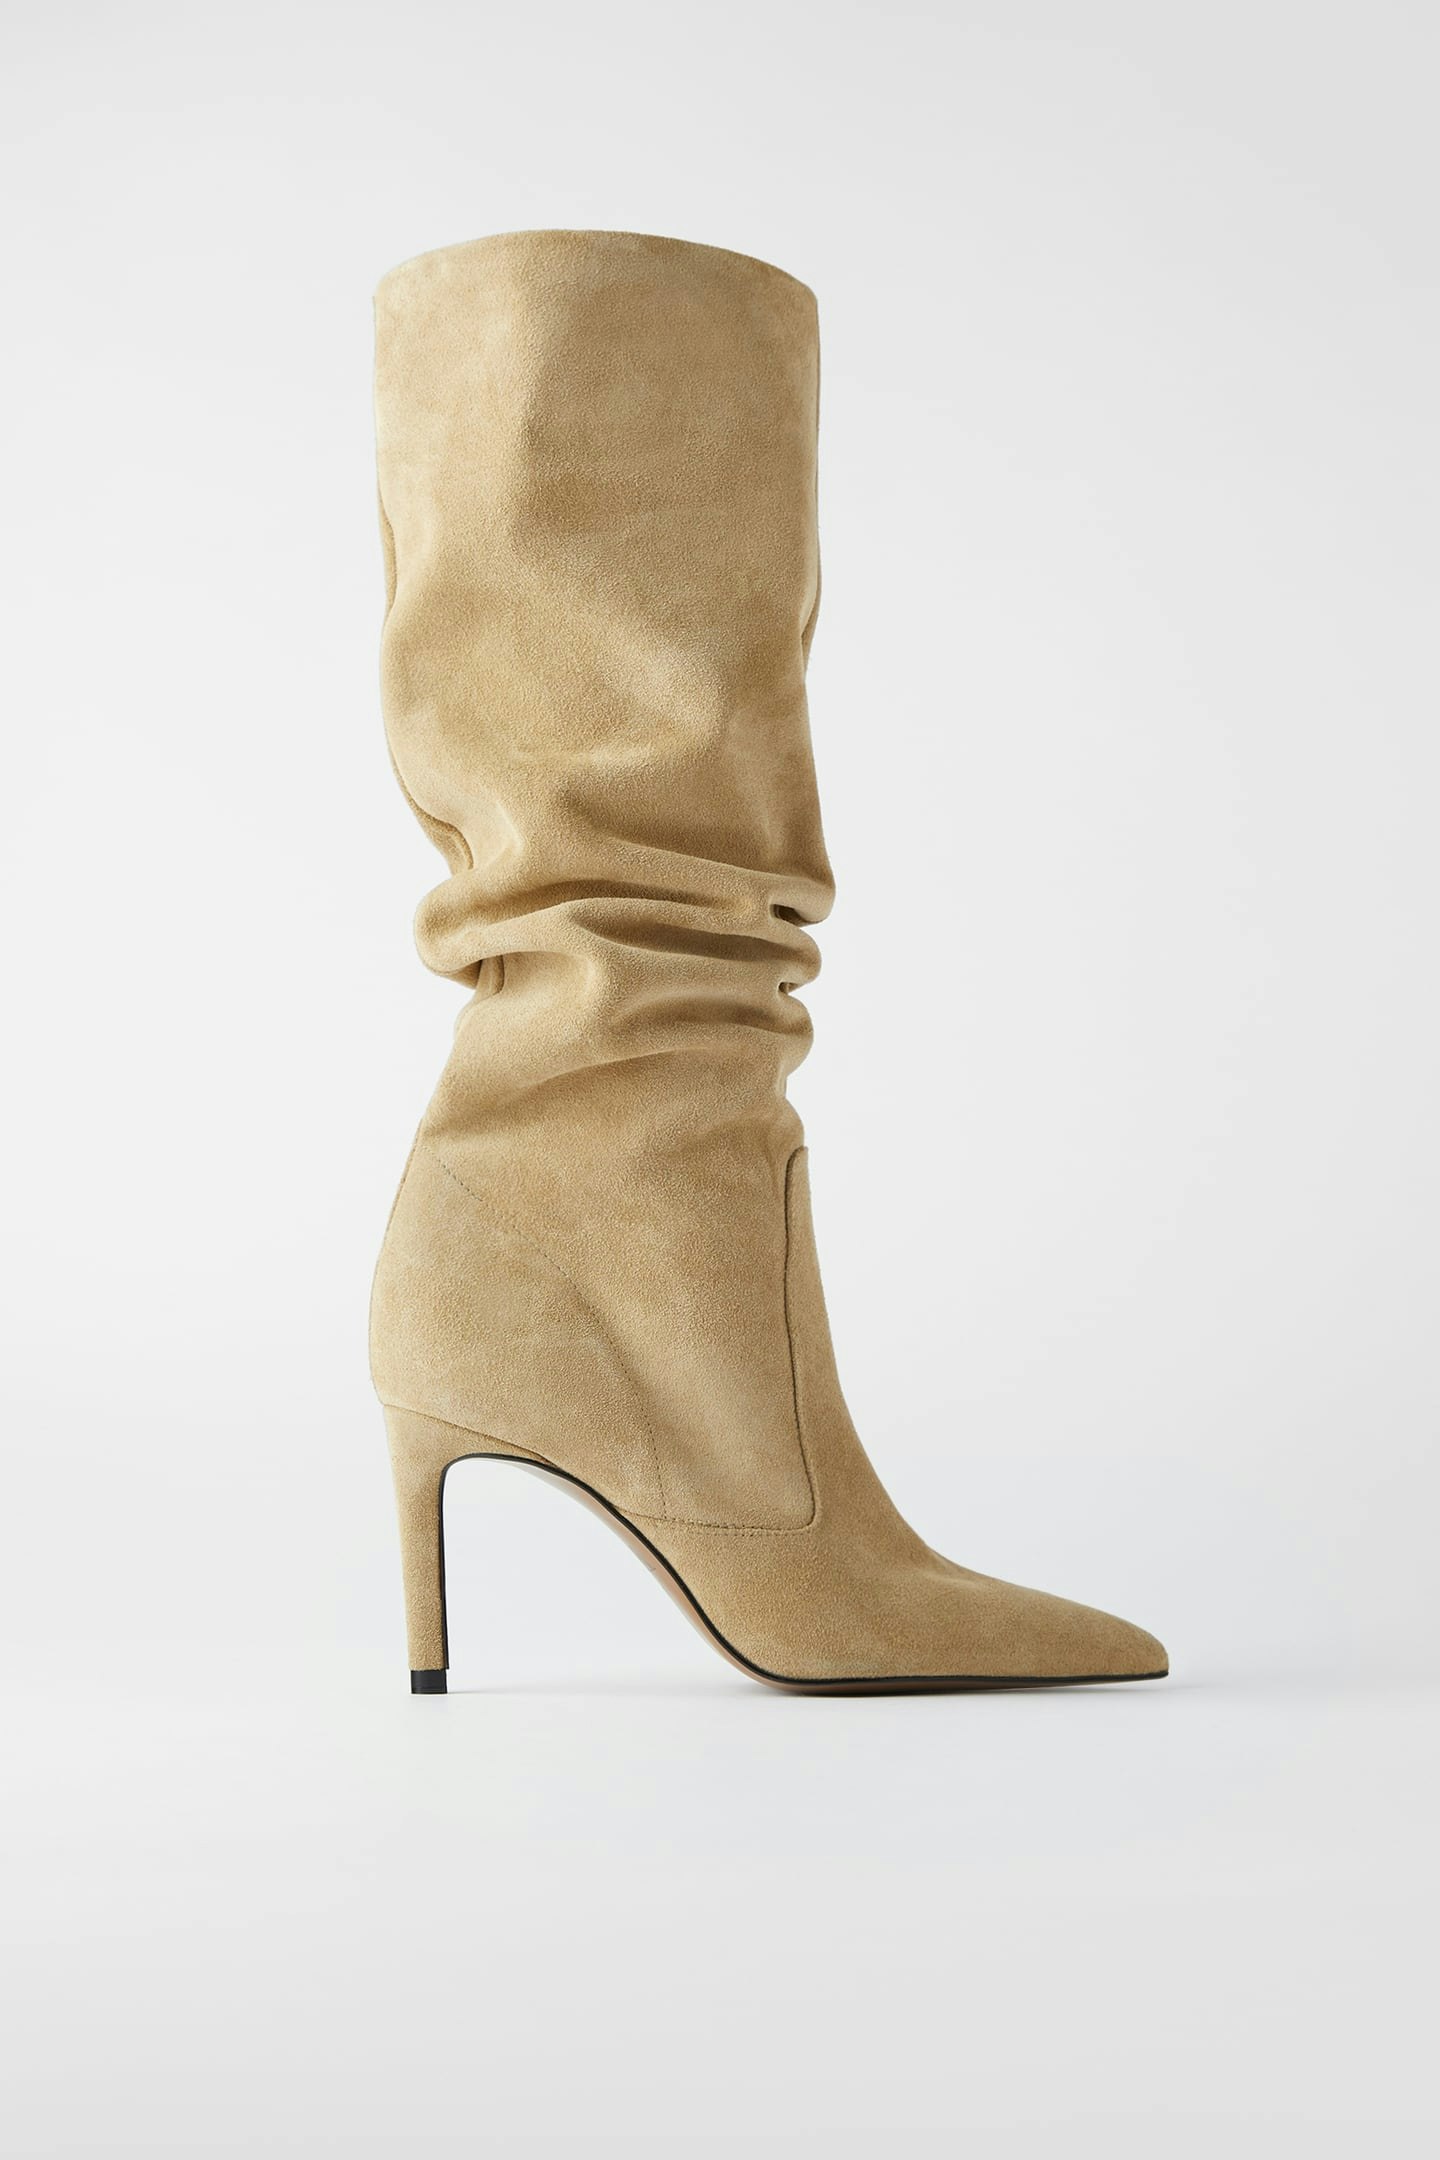 Zara, Split Suede Boots, £99.99